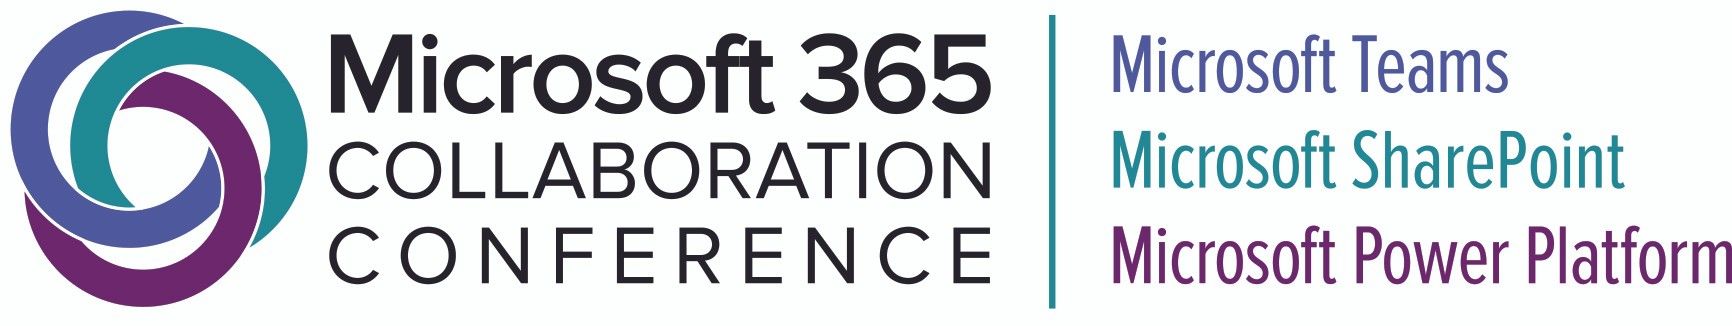 Microsoft 365 Collaboration Conference